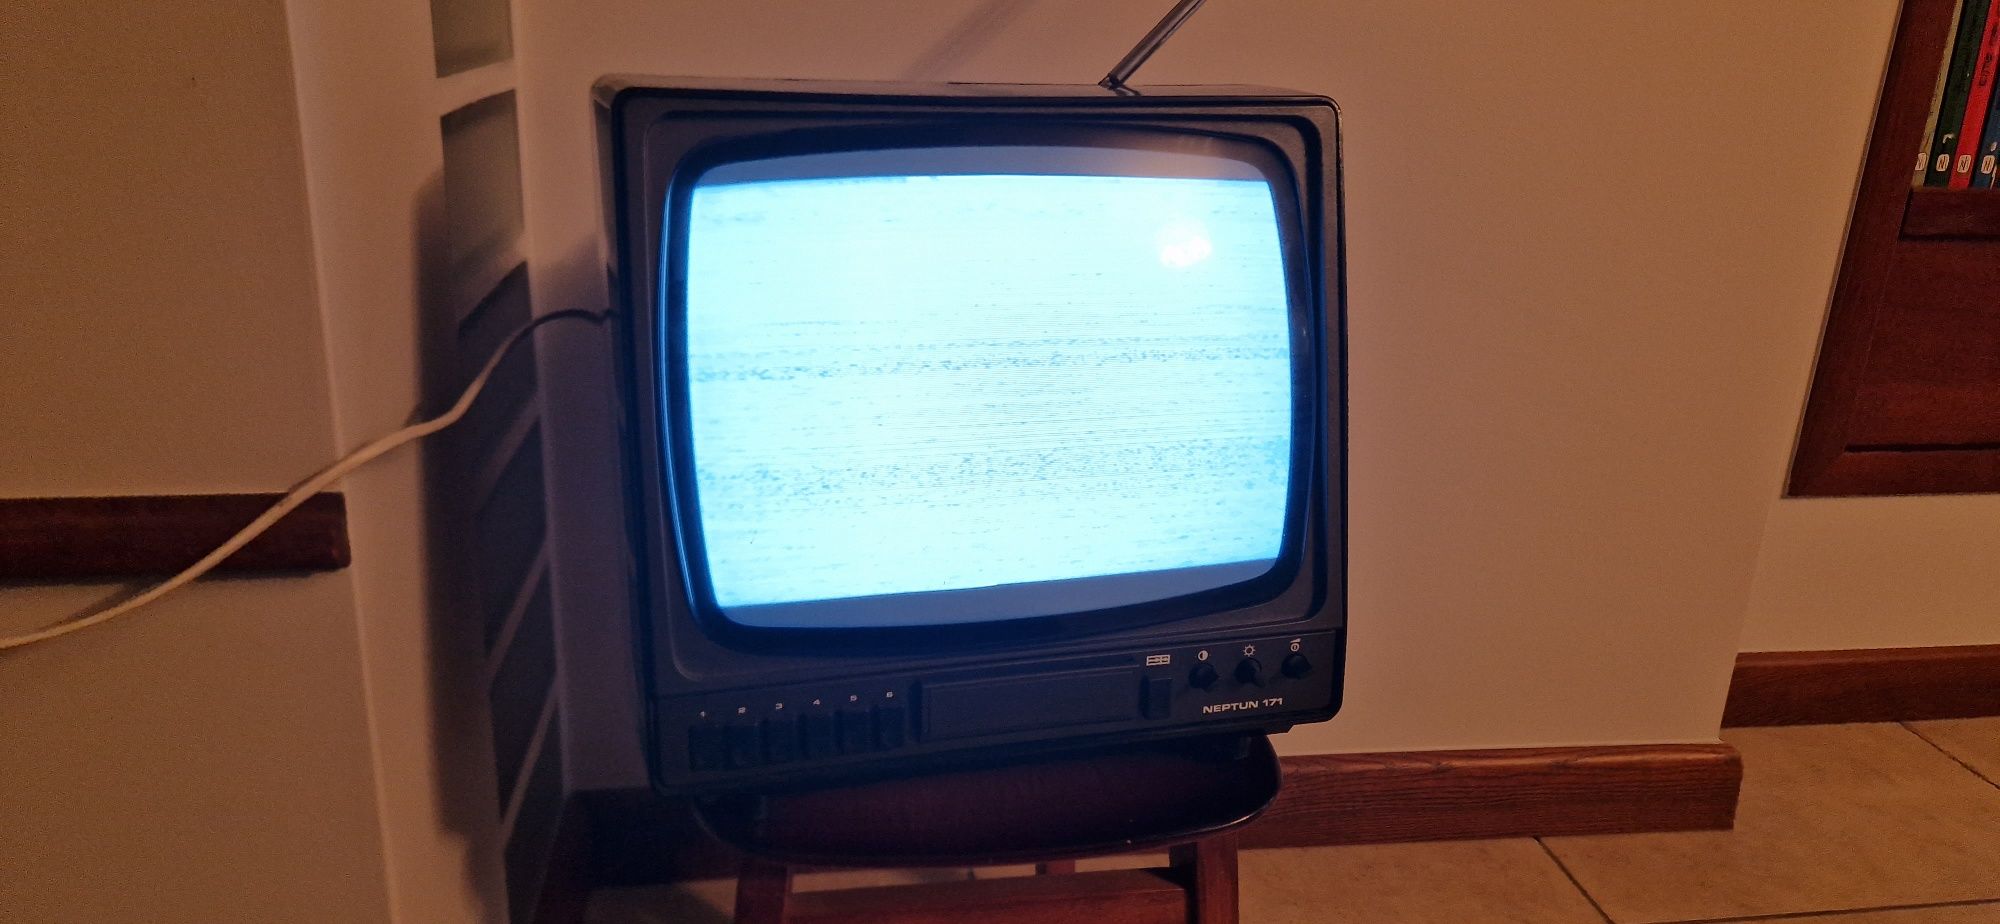 Grundig telewizor neptun 171